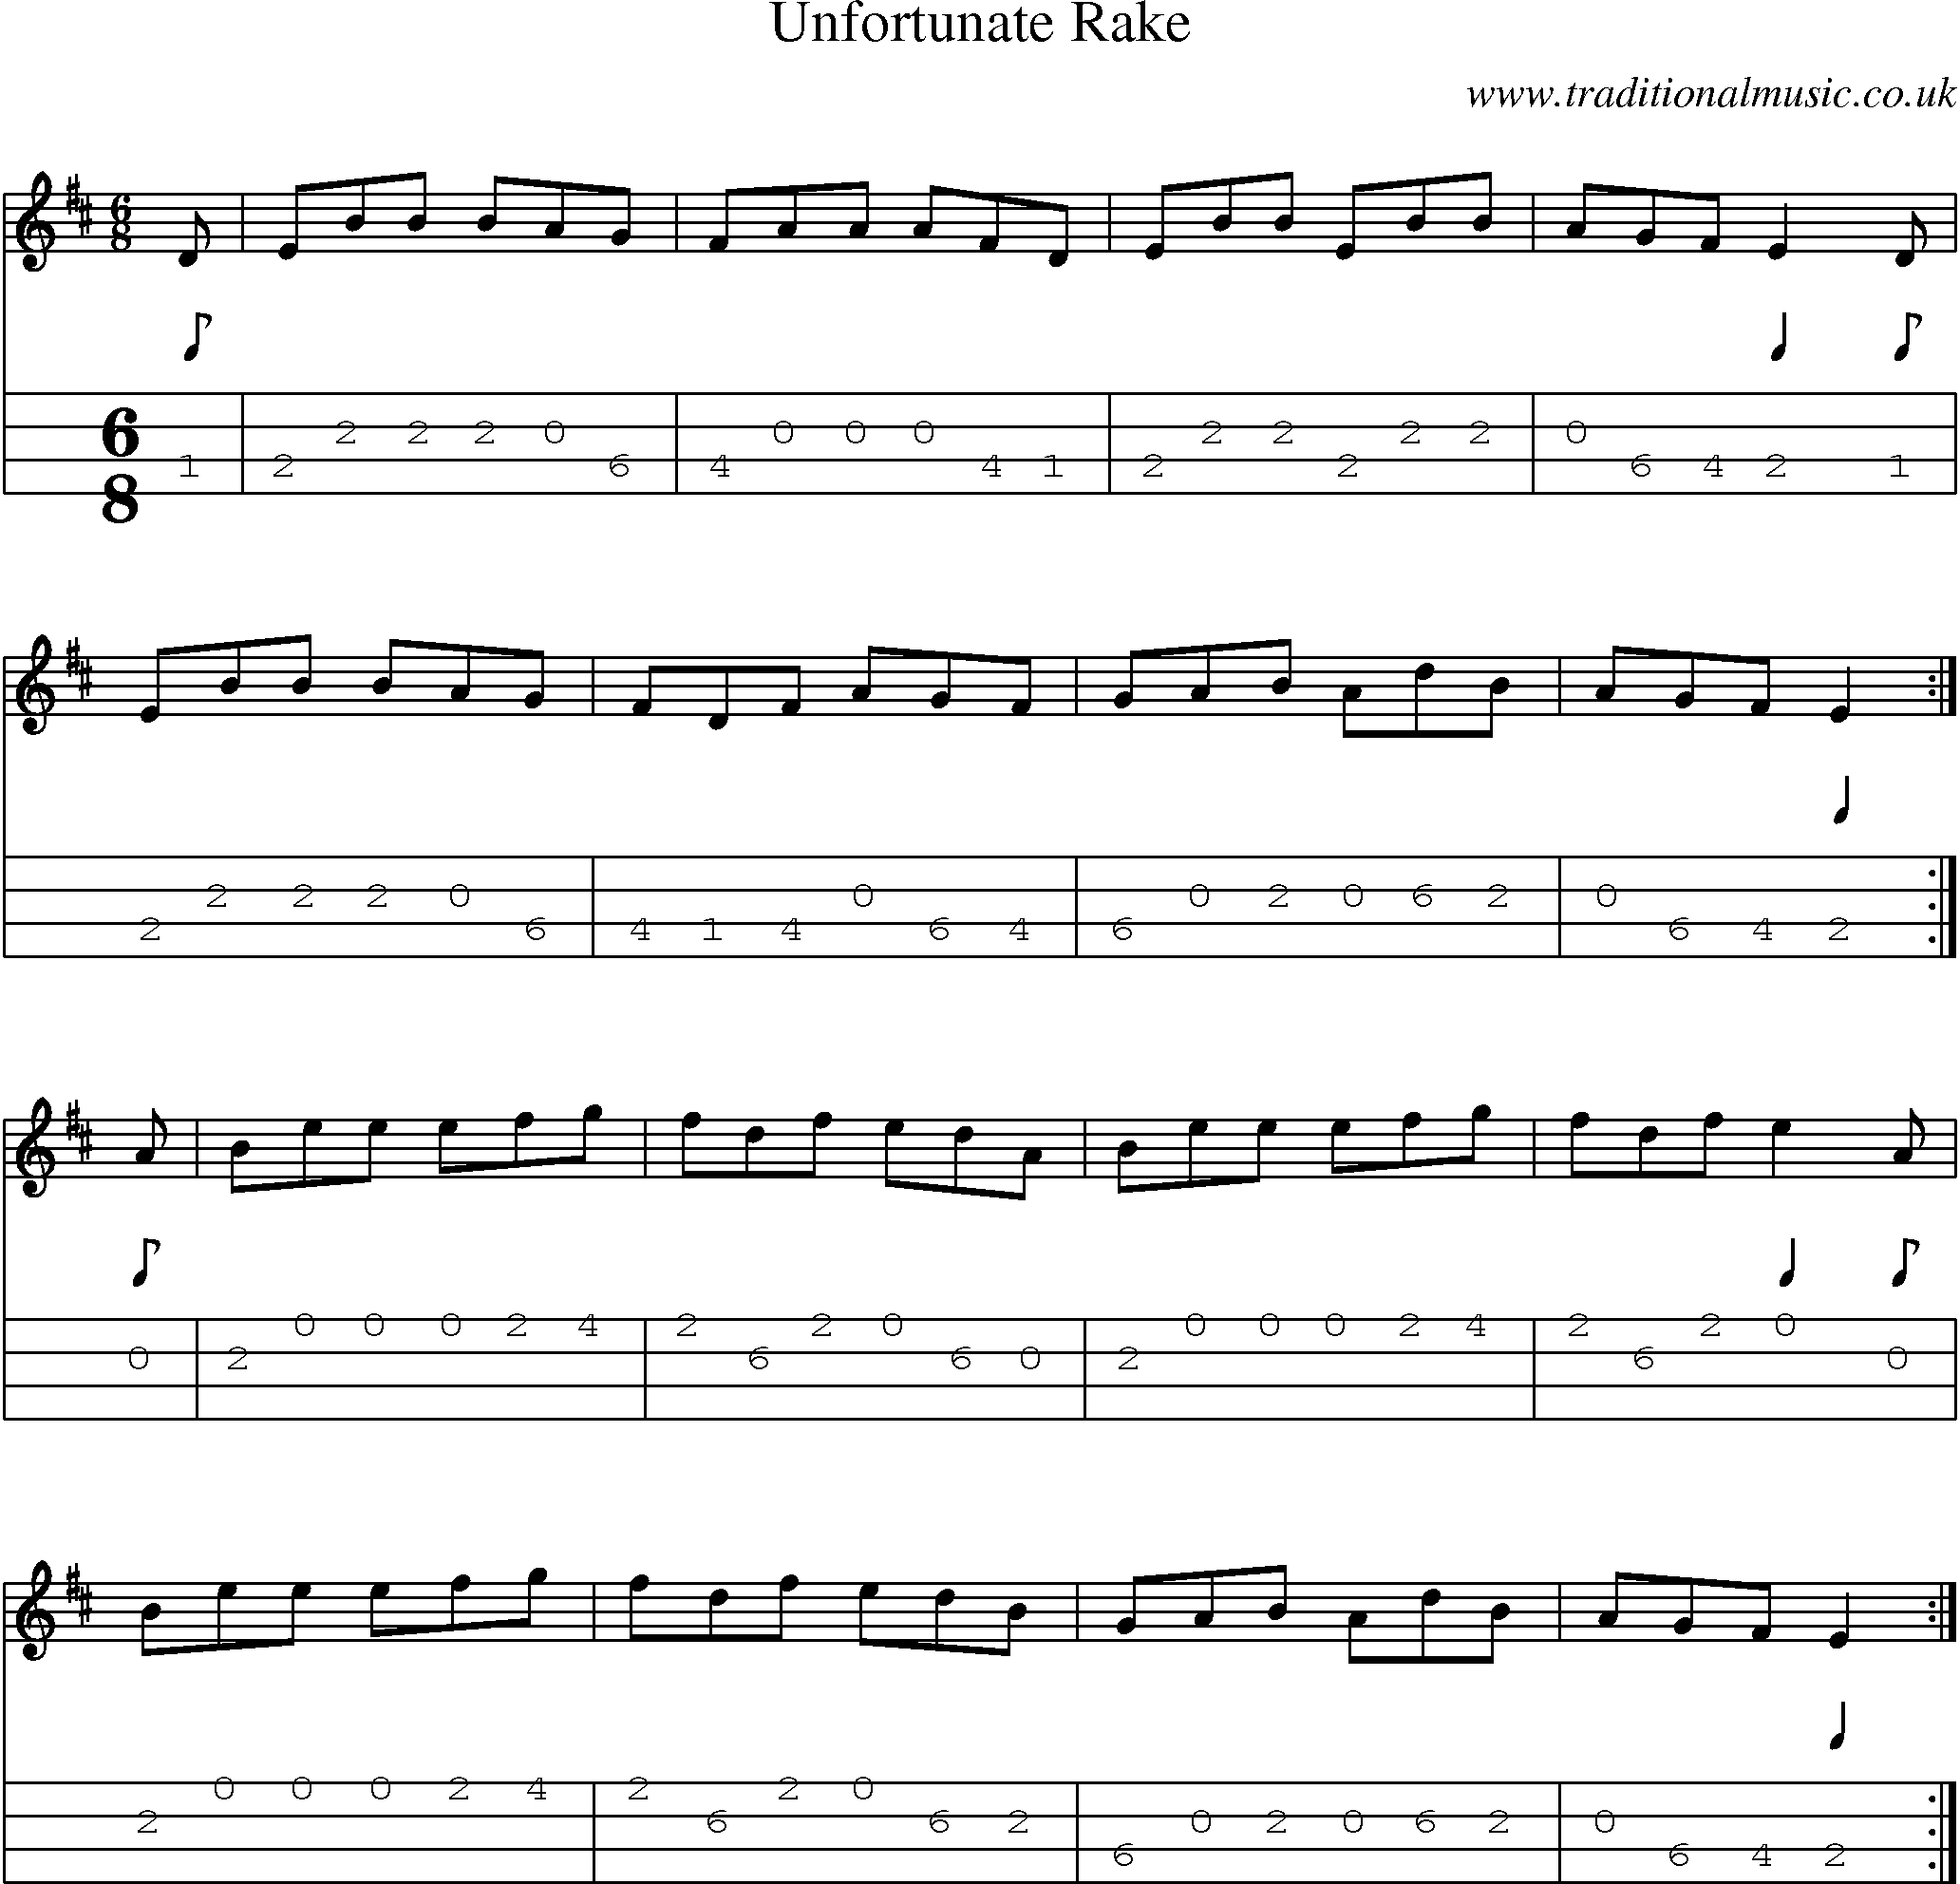 Music Score and Mandolin Tabs for Unfortunate Rake